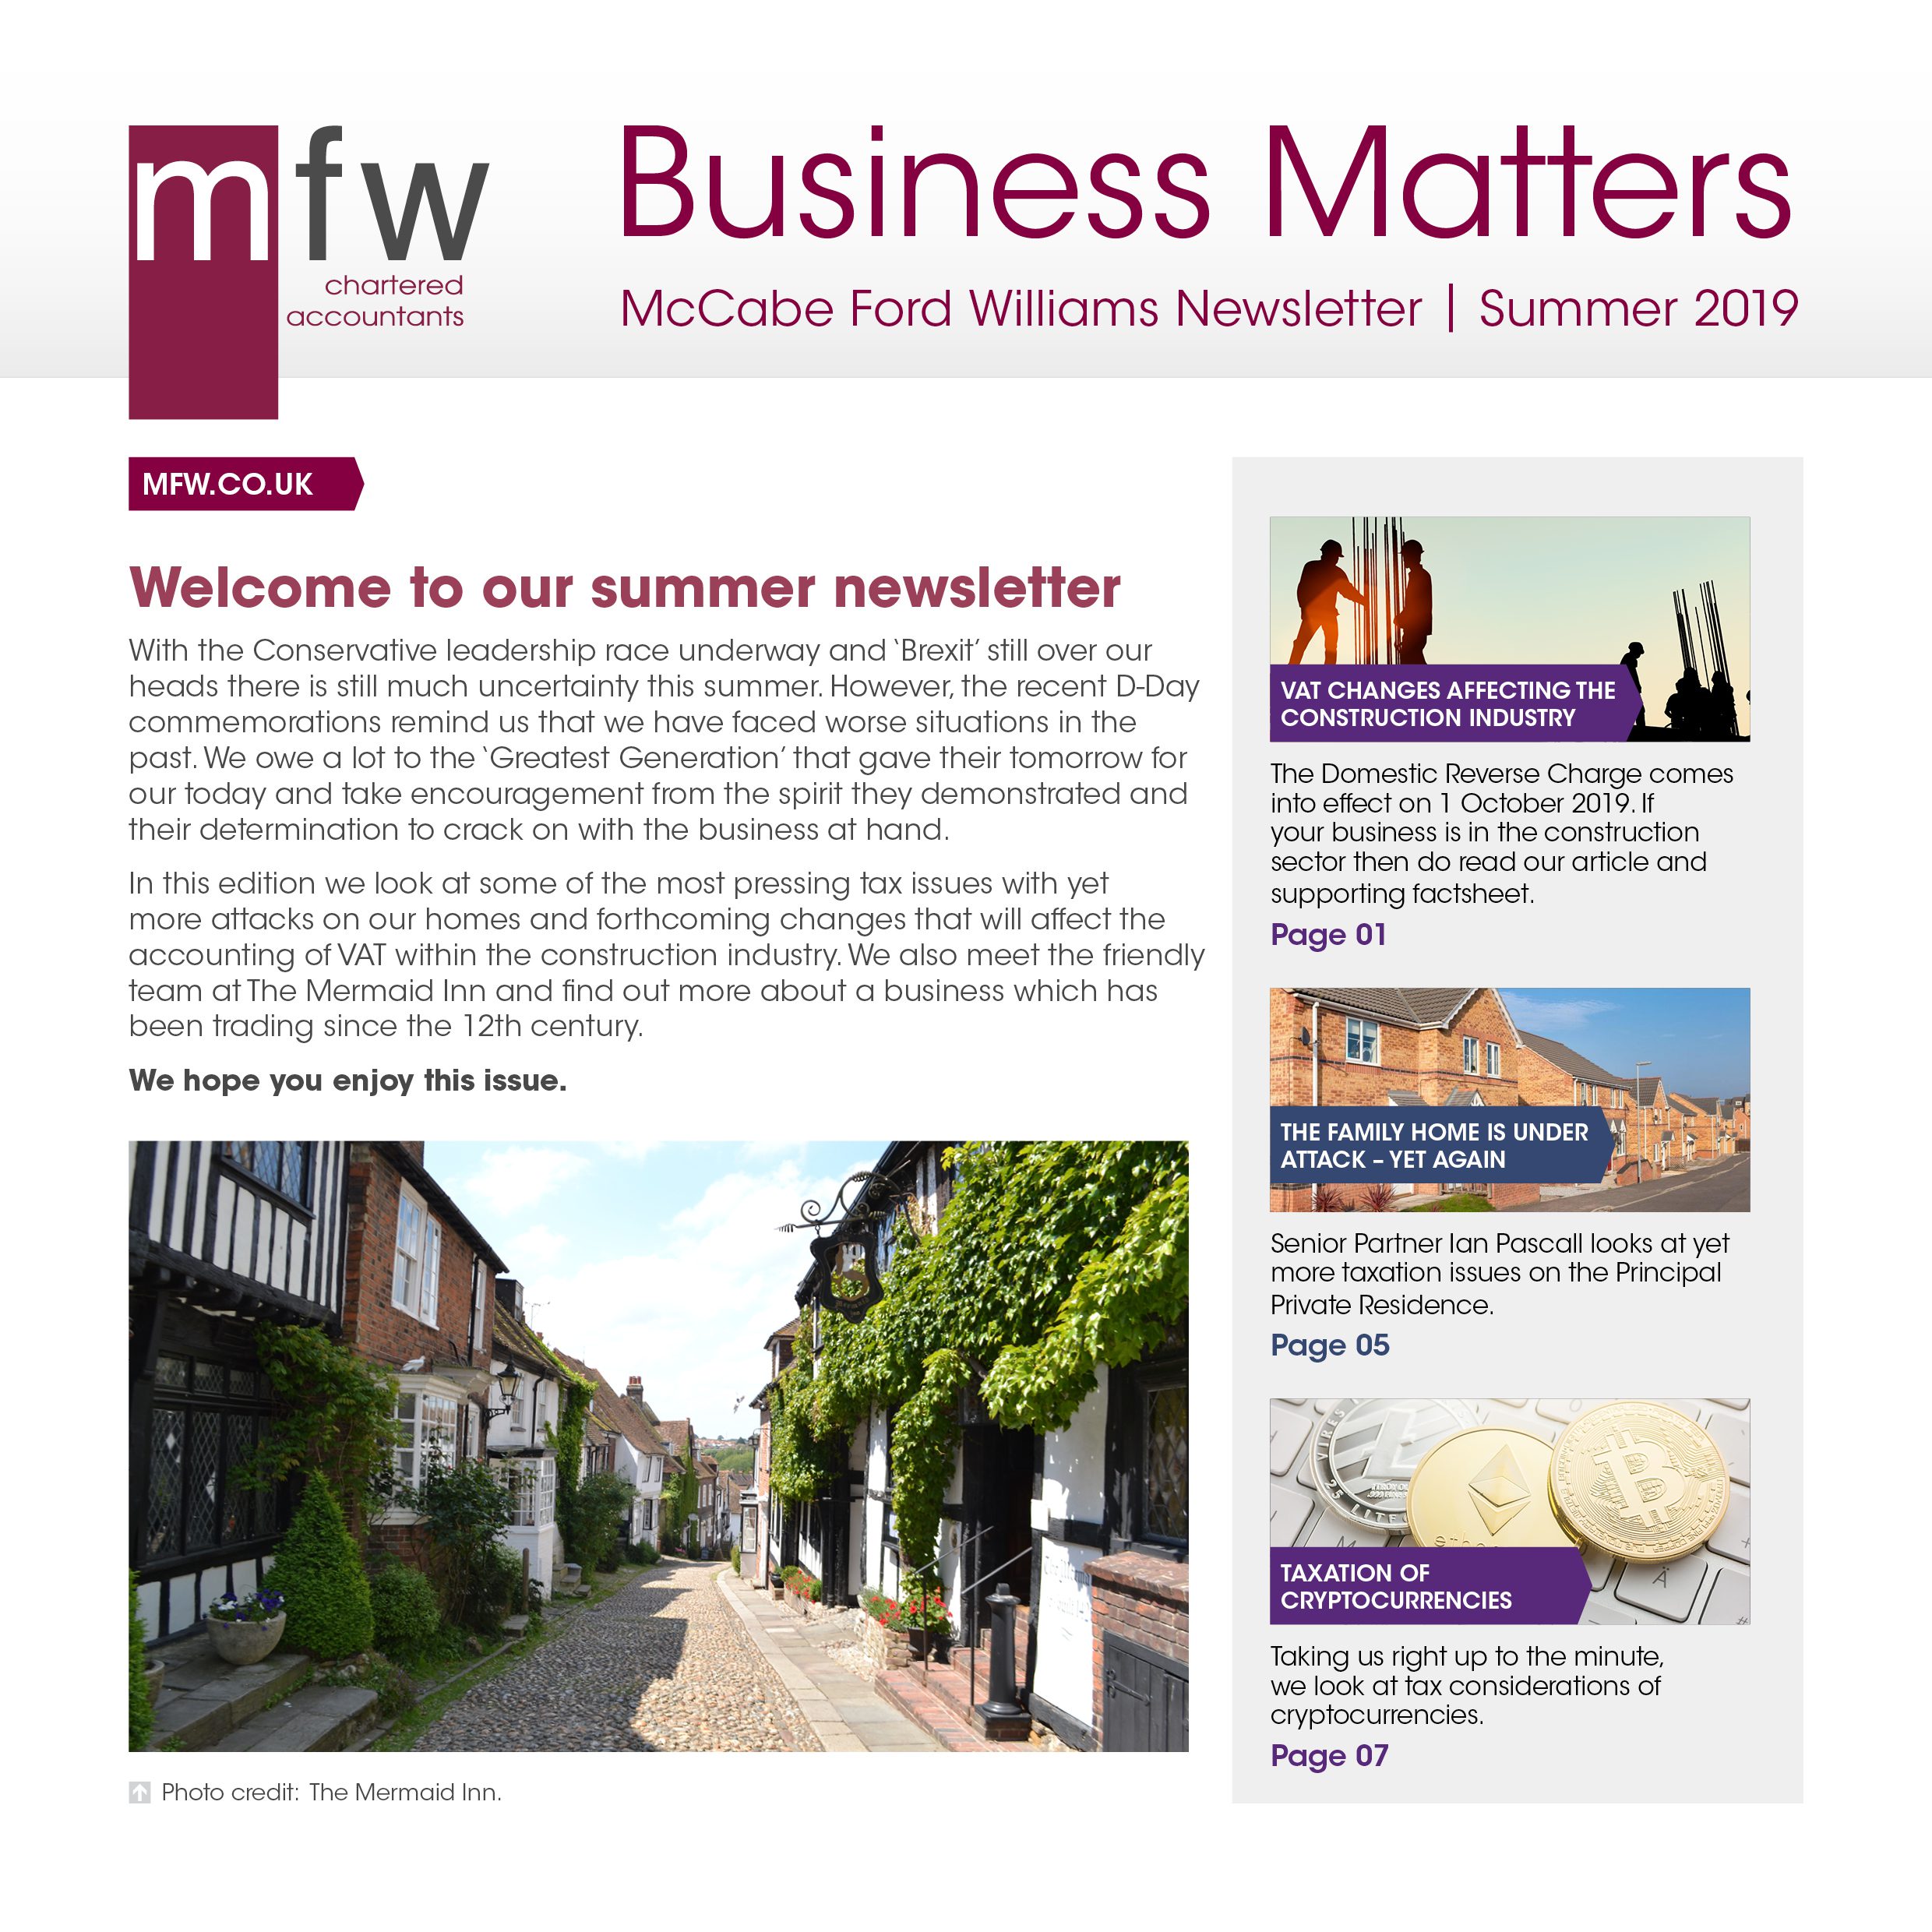 MFW Business Matters newsletter summer 2019 edition